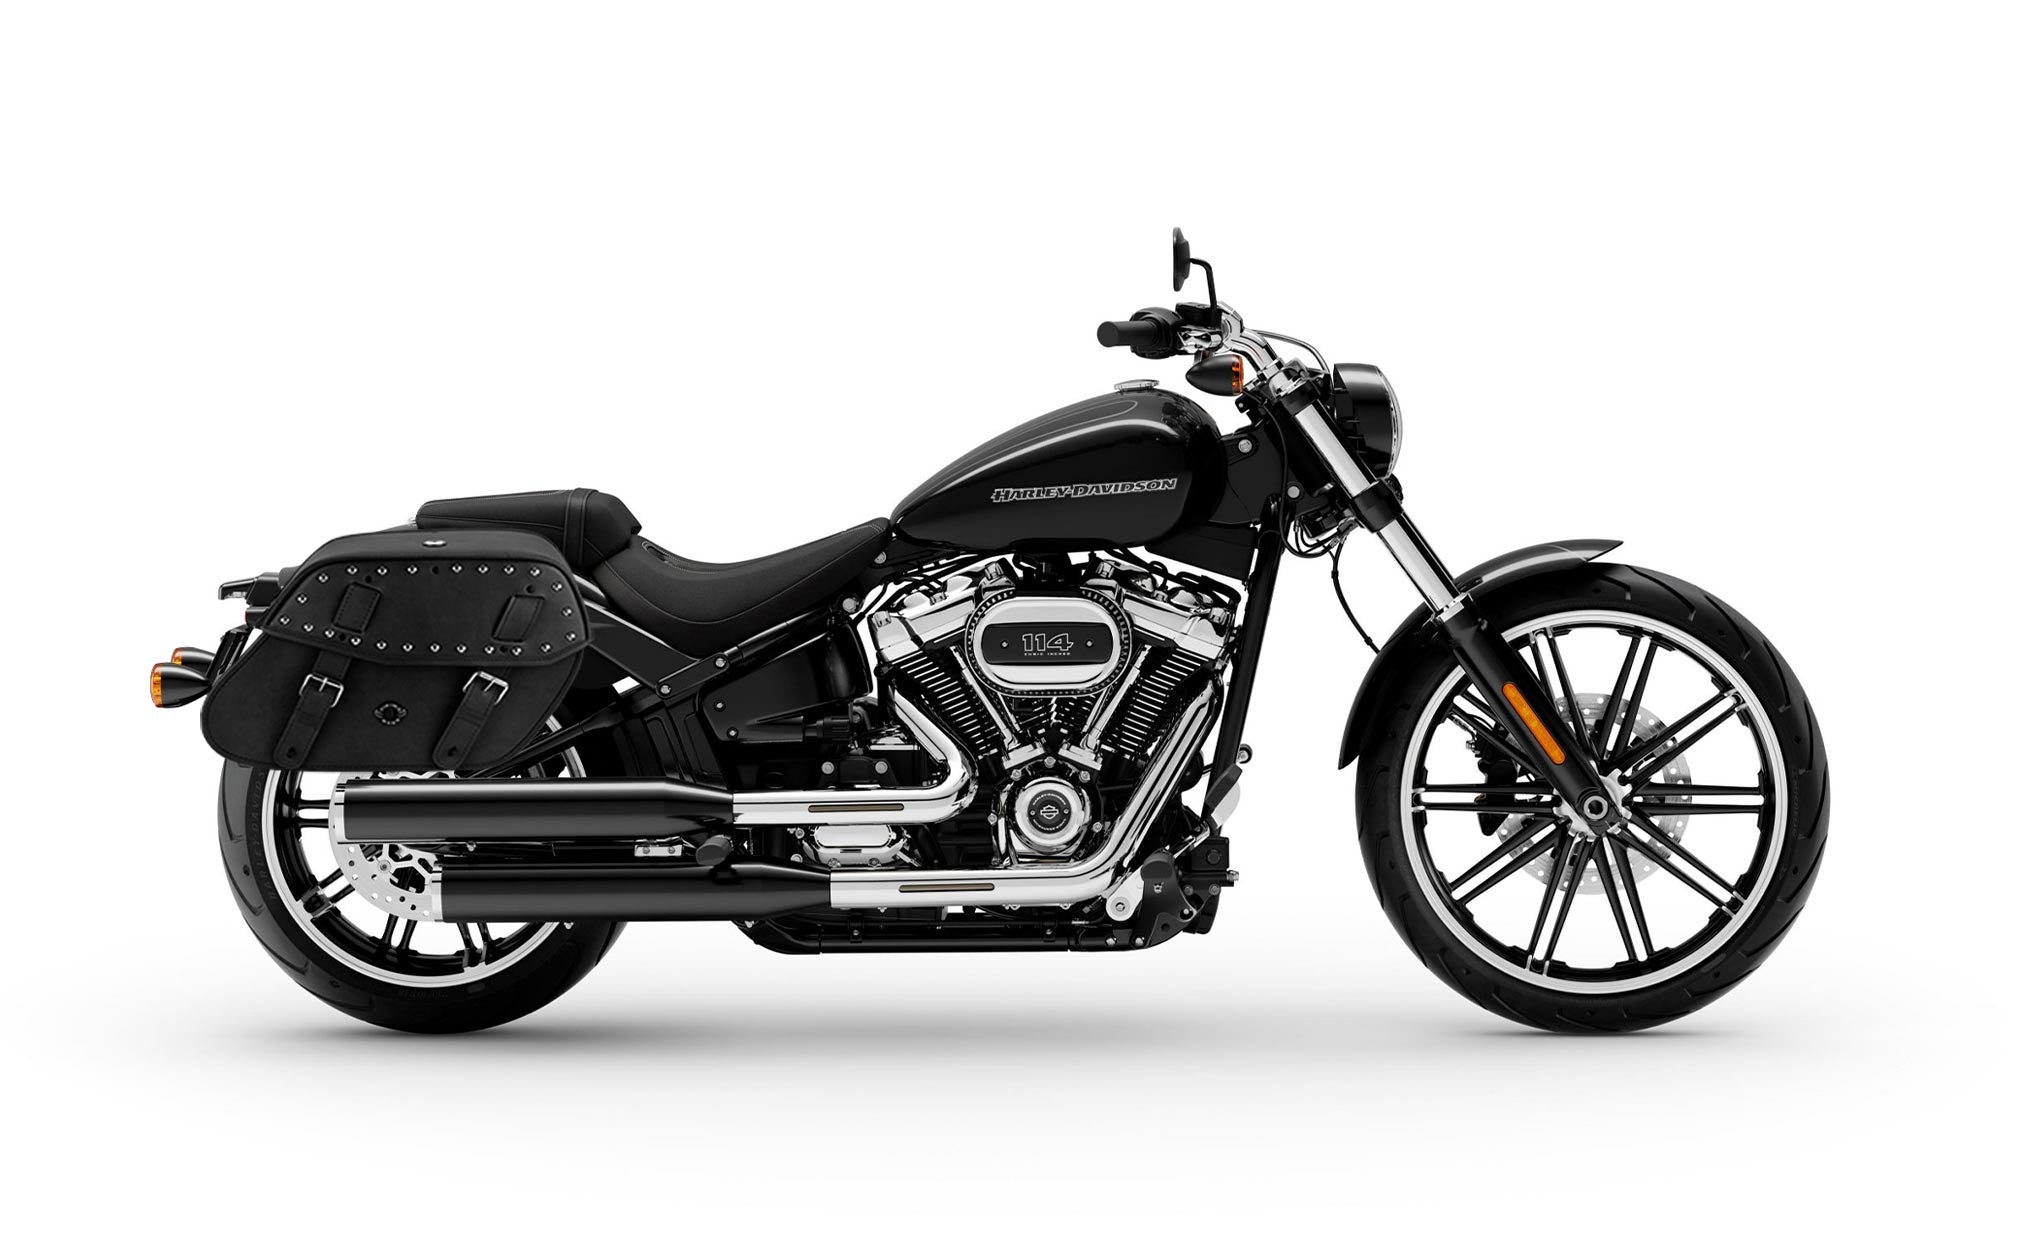 Viking Odin Large Studded Leather Motorcycle Saddlebags For Harley Softail Breakout 114 Fxbr S on Bike Photo @expand